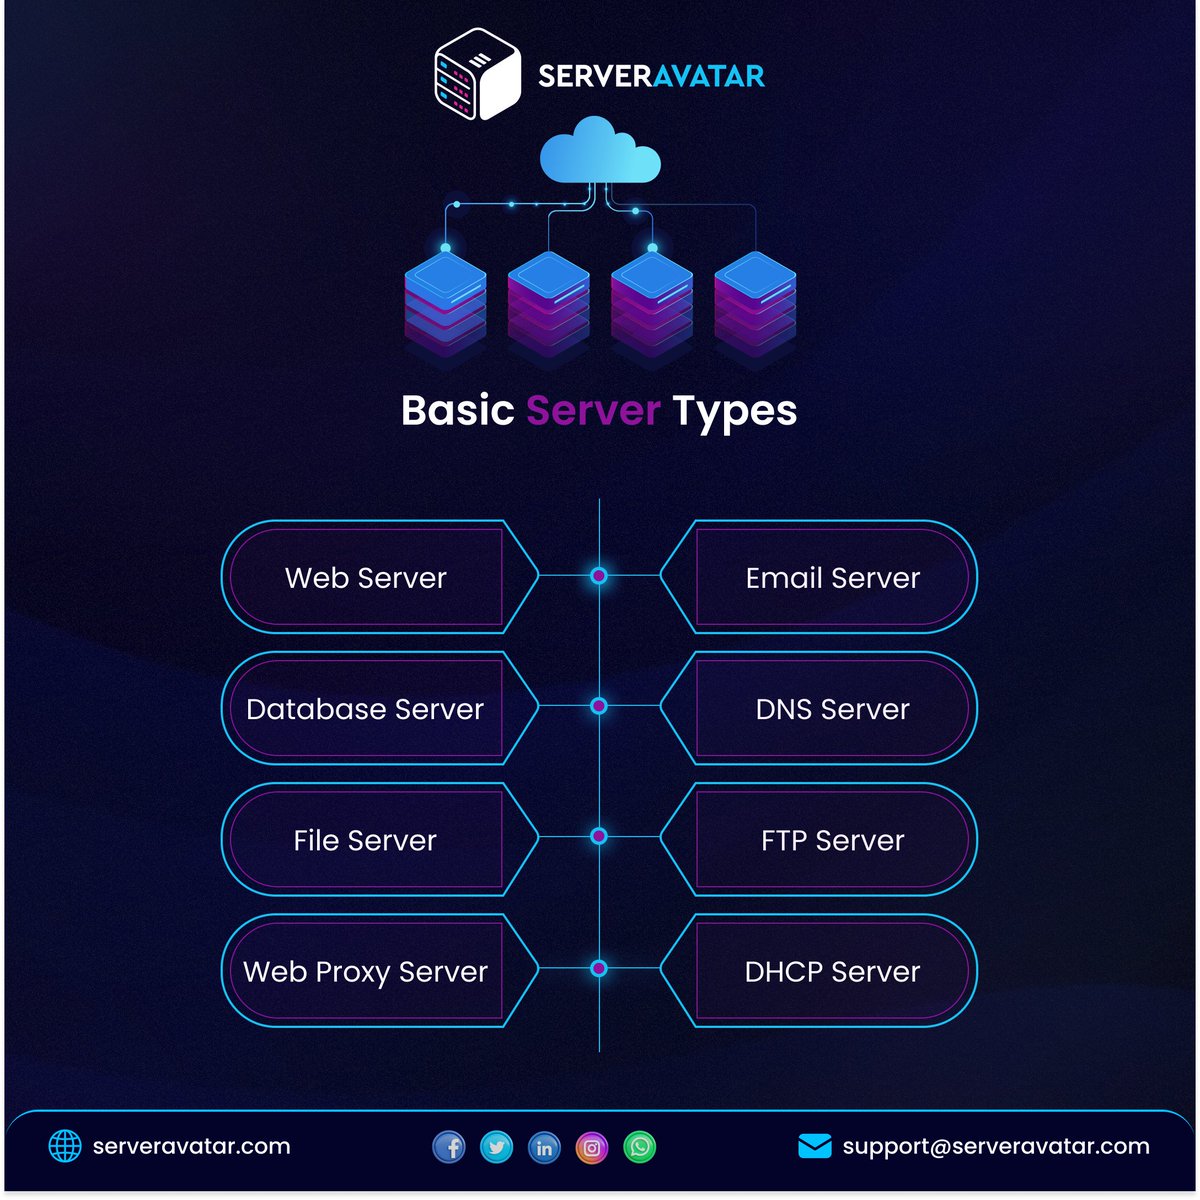 🌐 Basic Server Types!  

🔗 Visit To👇
t.ly/jUy-y

serveravatar.com

#webserver #databaseserver #fileserver #webproxy #WebProxyServer #emailserver #DNS #ftpserver #DHCP #clouds #Server #serveravatar #CloudHosting #VPS #AWS #linux #coding #webdev